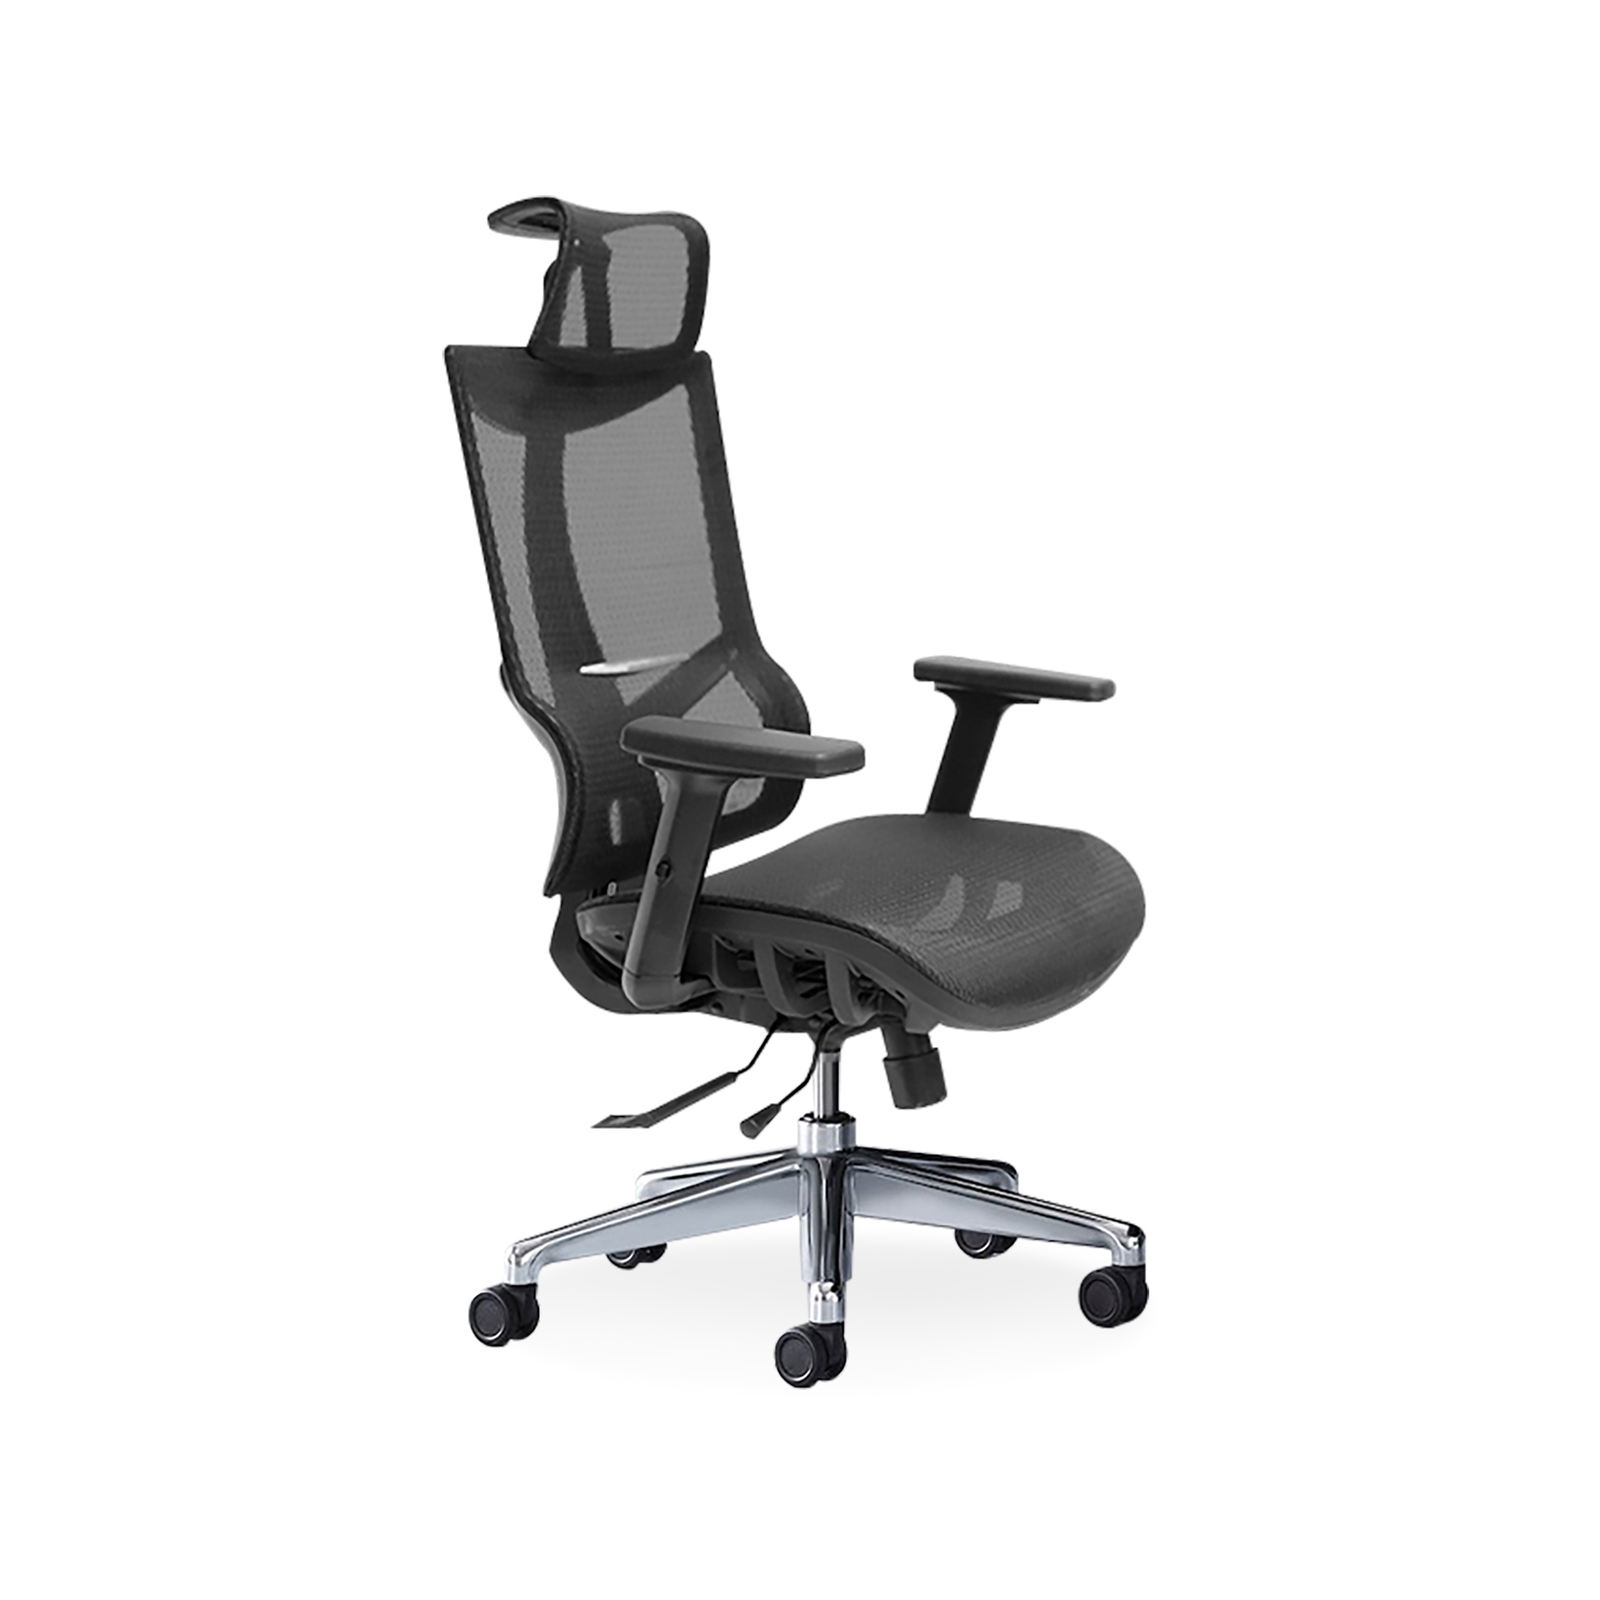 MIUZ Ergonomic Mesh Office Chair Gaming Executive Fabric Seat Headrest BLACK